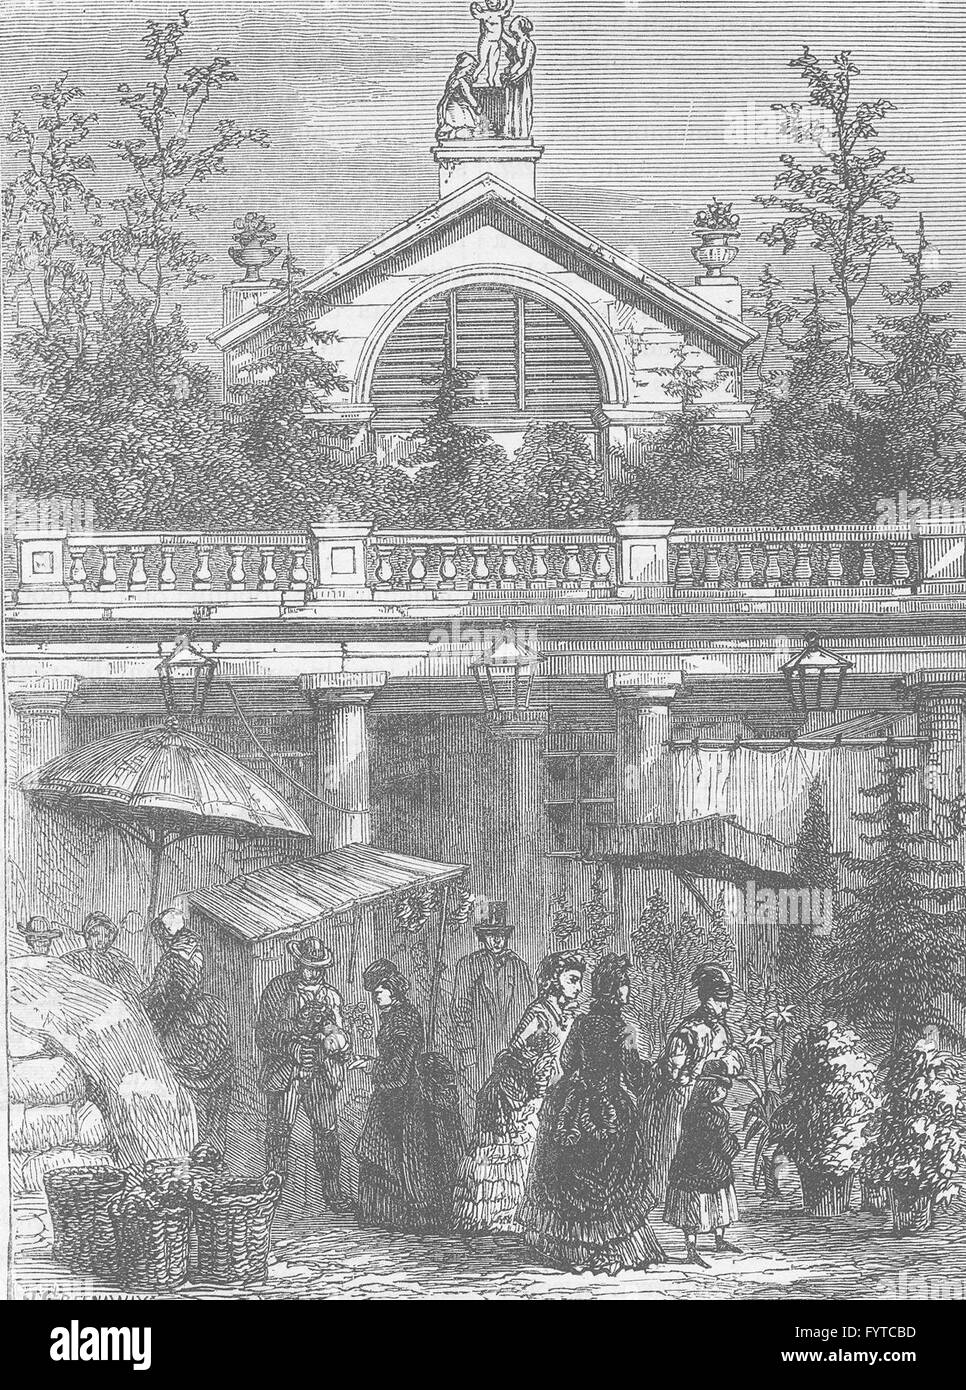 COVENT GARDEN MARKET: Entrance to the market. London, antique print c1880 Stock Photo